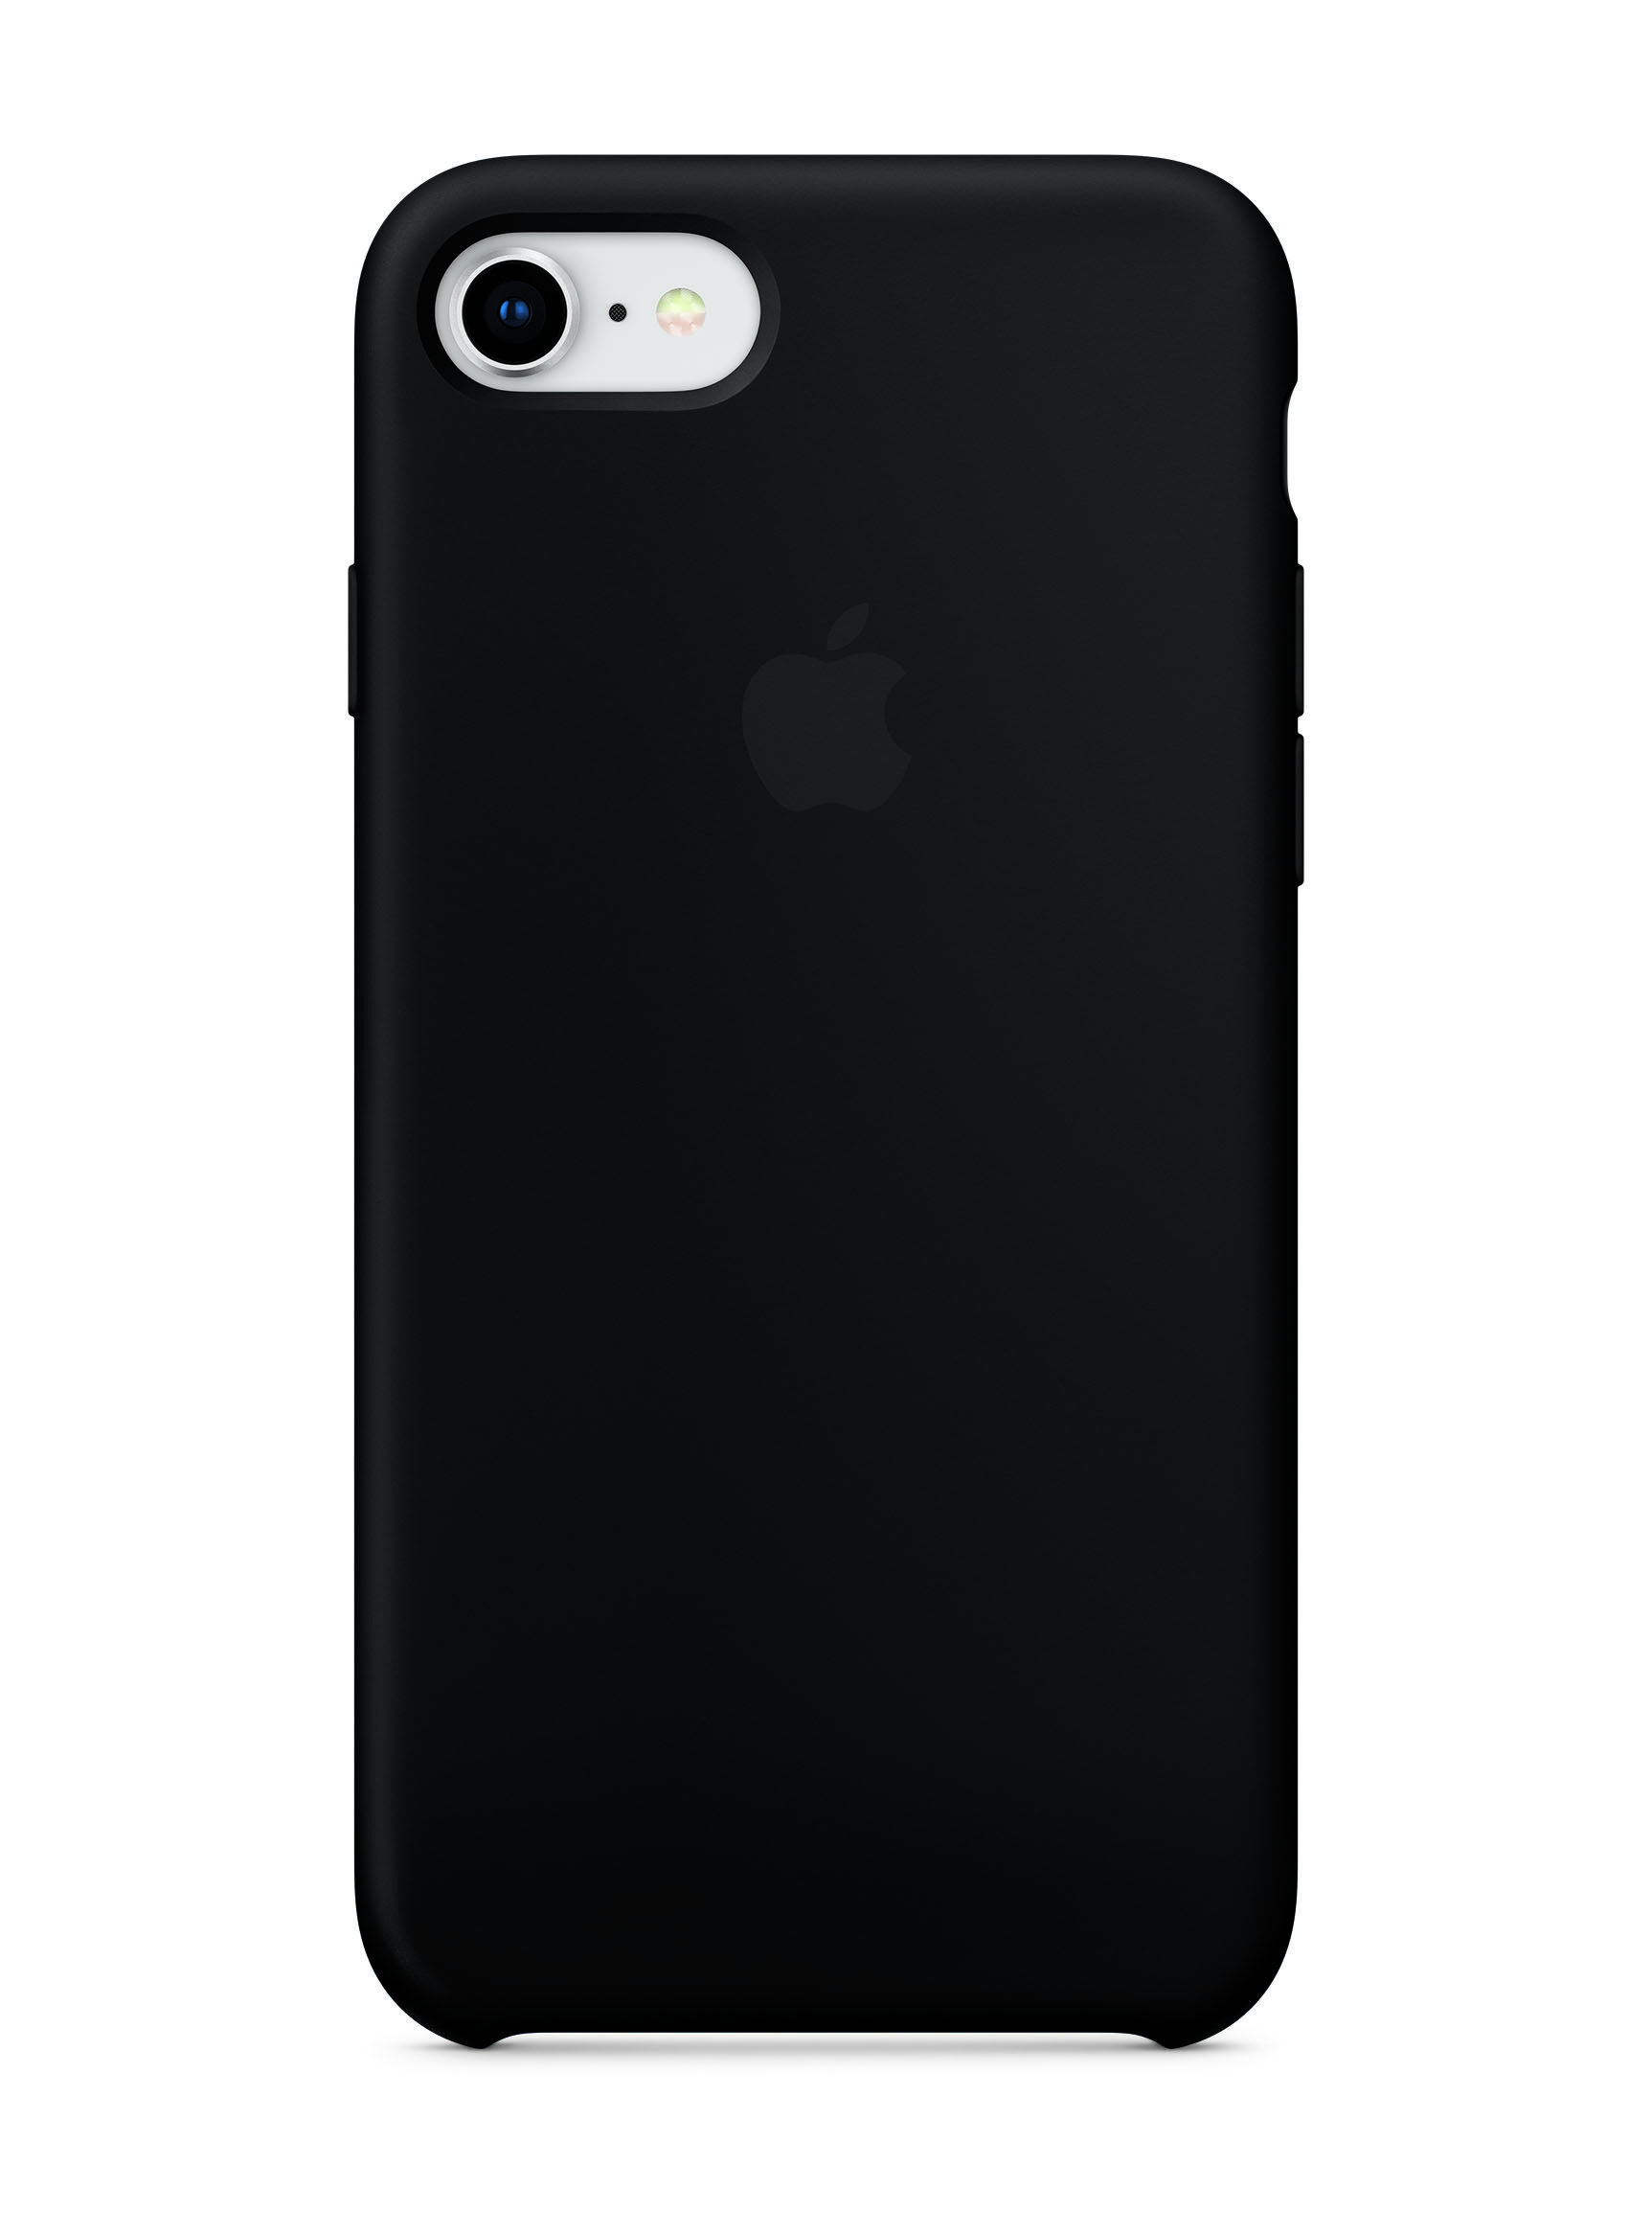 Compra Apple Carcasa original silicona iPhone 8